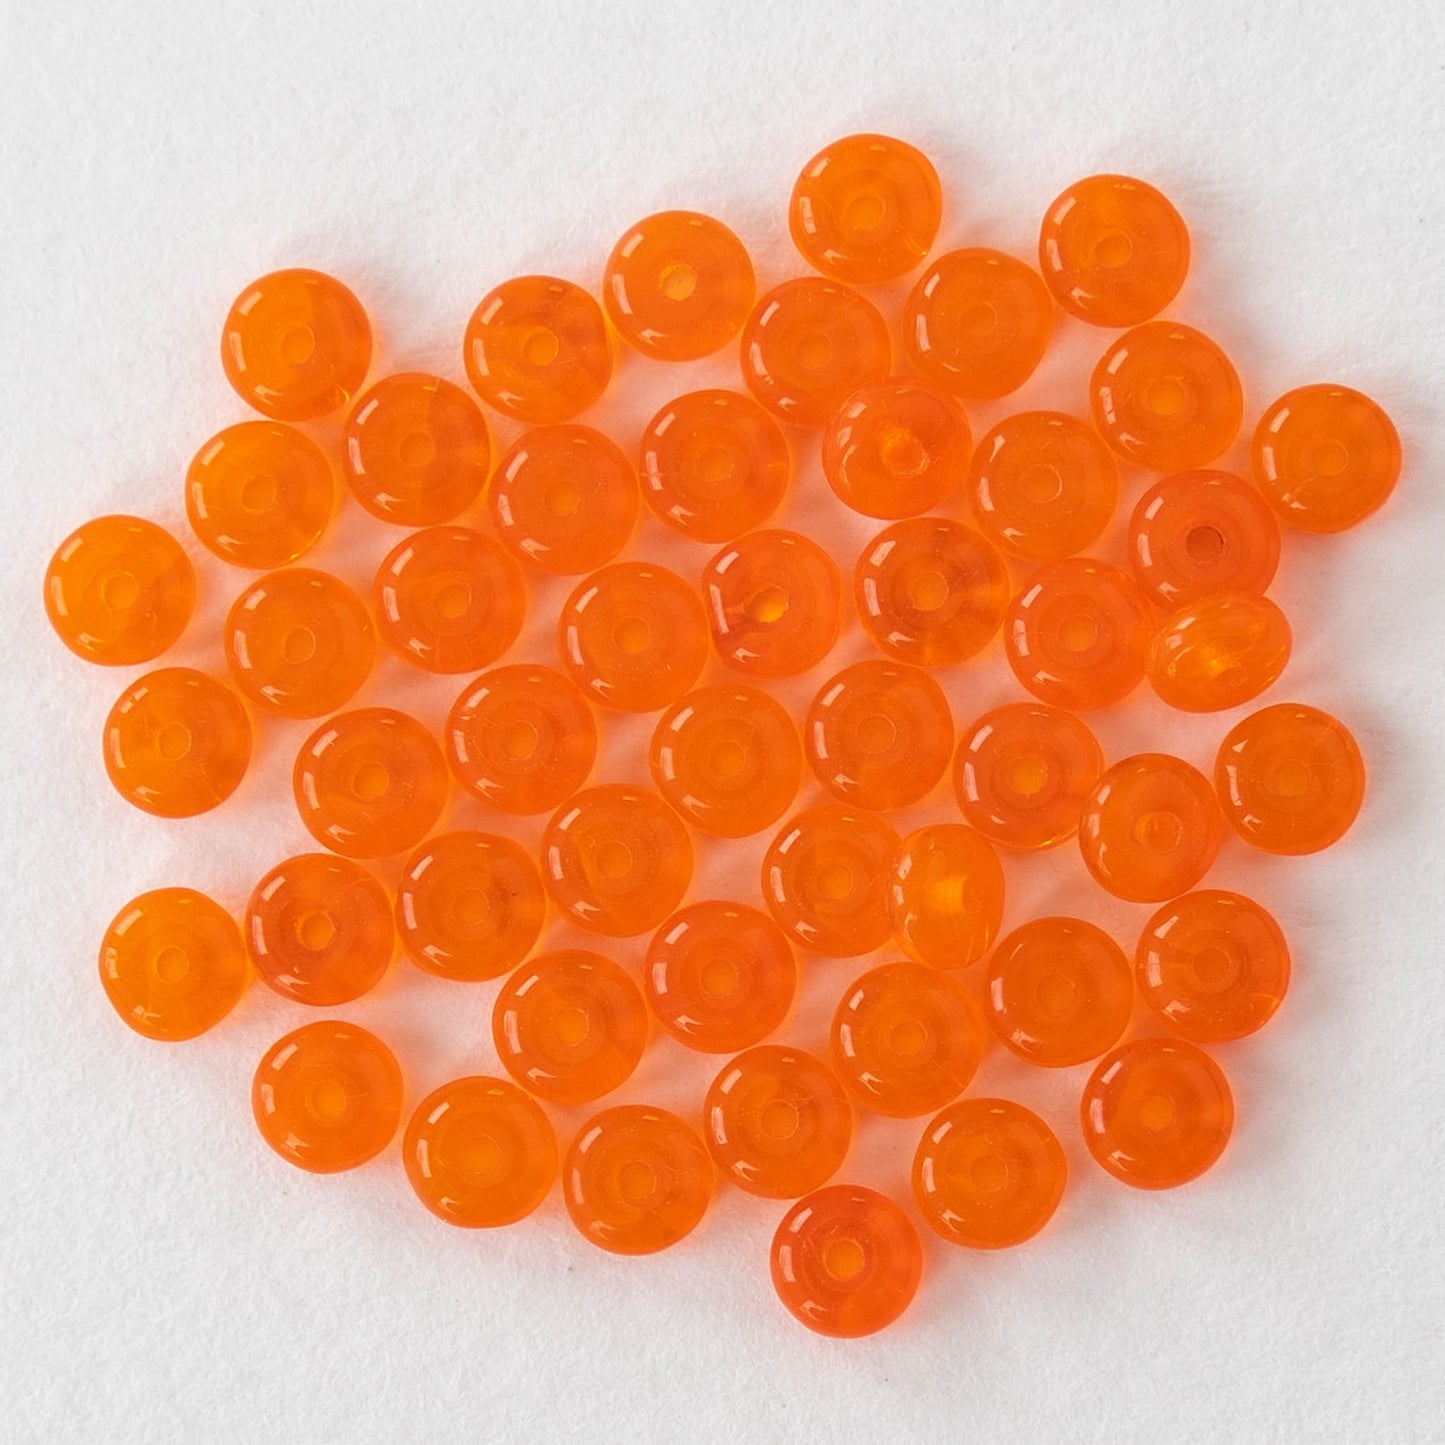 4mm Rondelle Beads - Orange Opaline Hyacinth - 100 beads